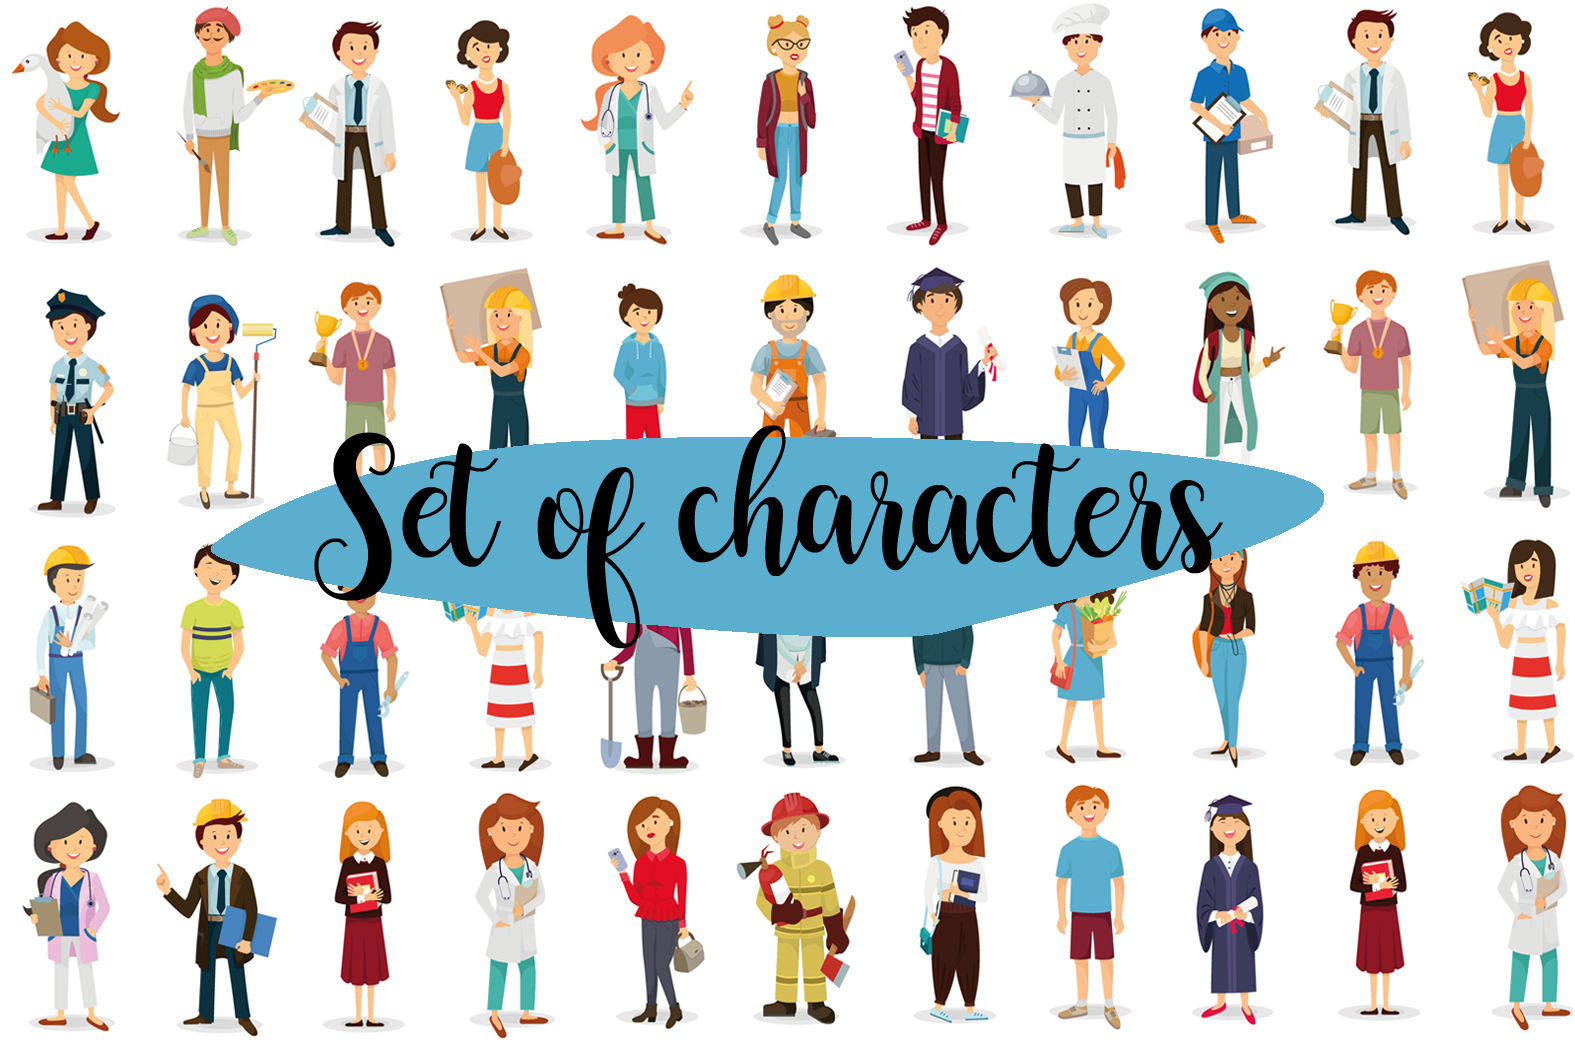 40+卡通职业形象矢量图标 Set of characters插图